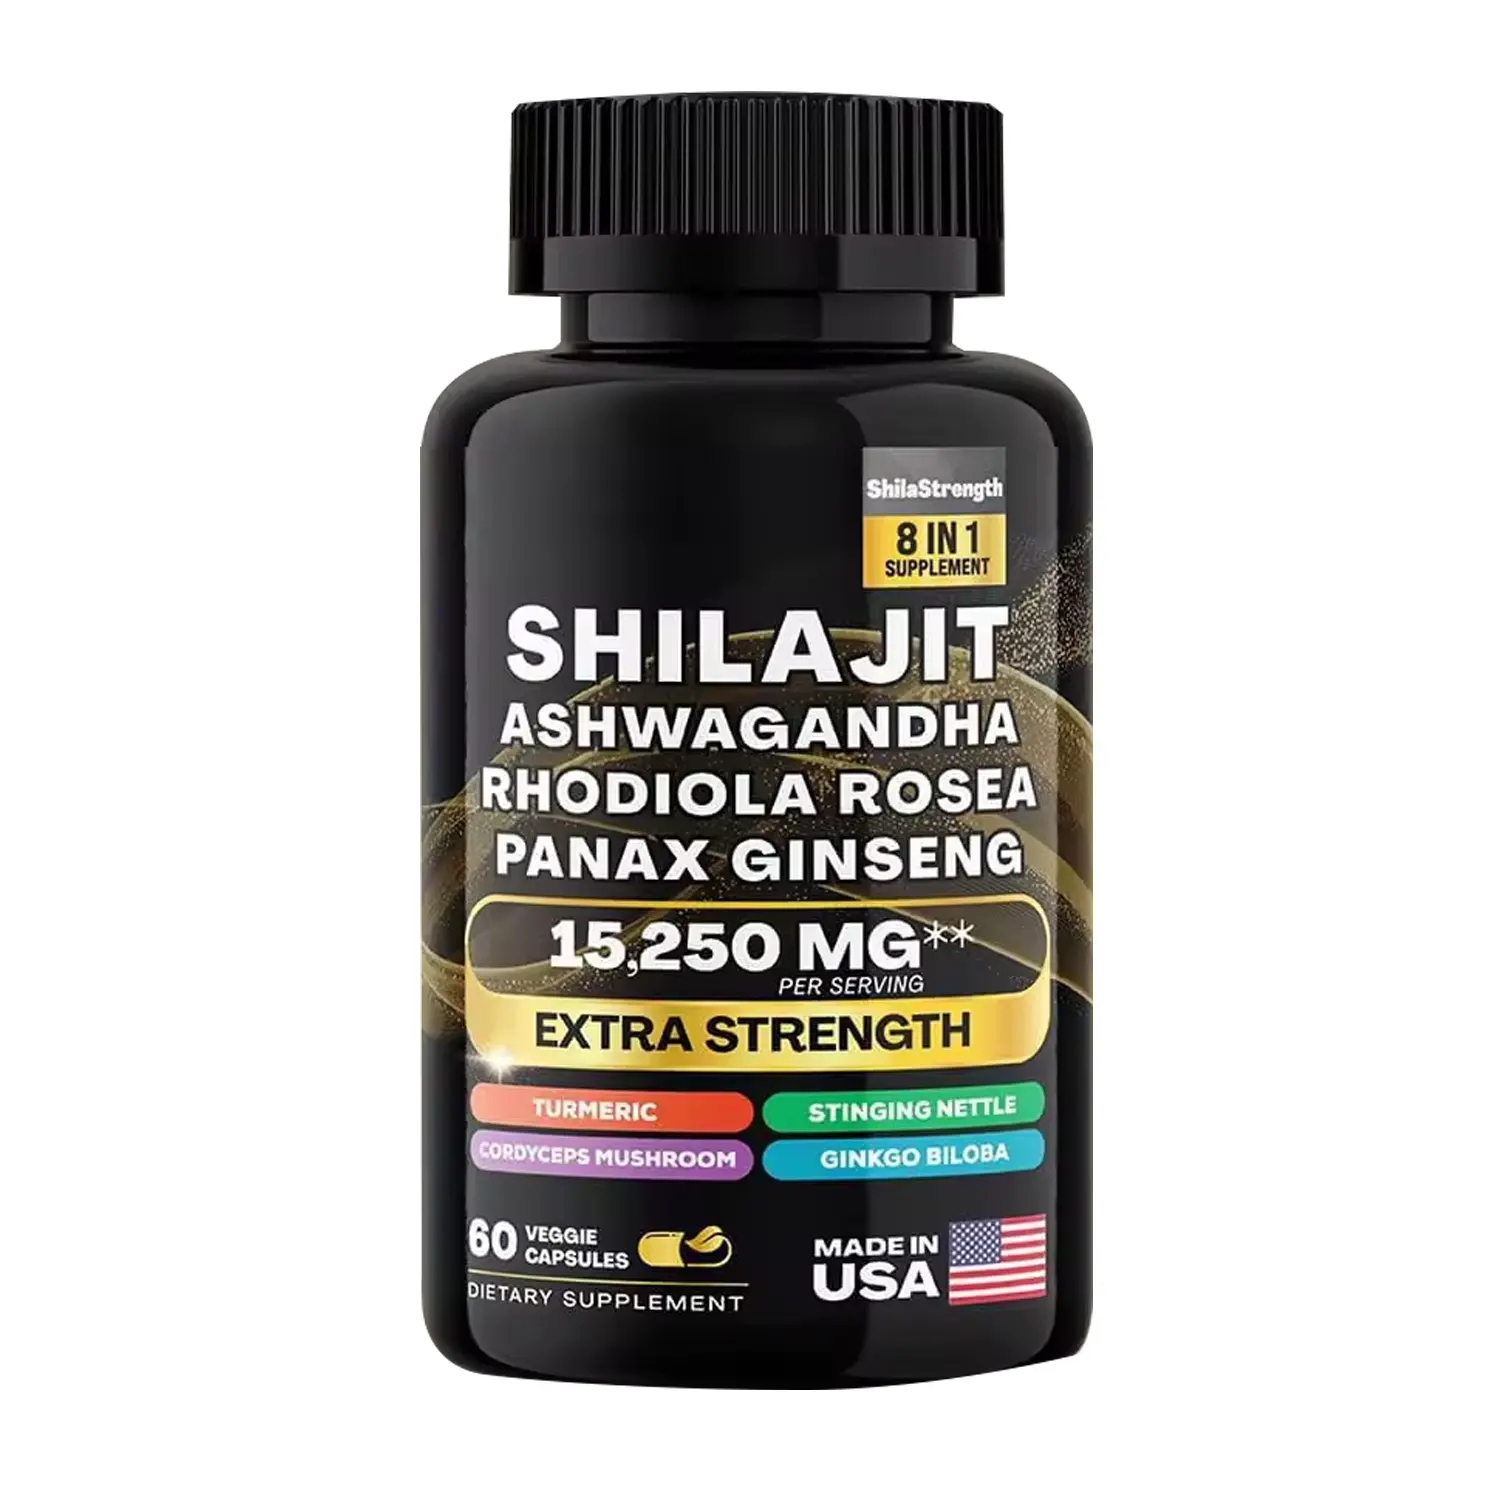 High quality private label shilajit pure himalayan extract quality shilajit extract powder 20% fulvic acid